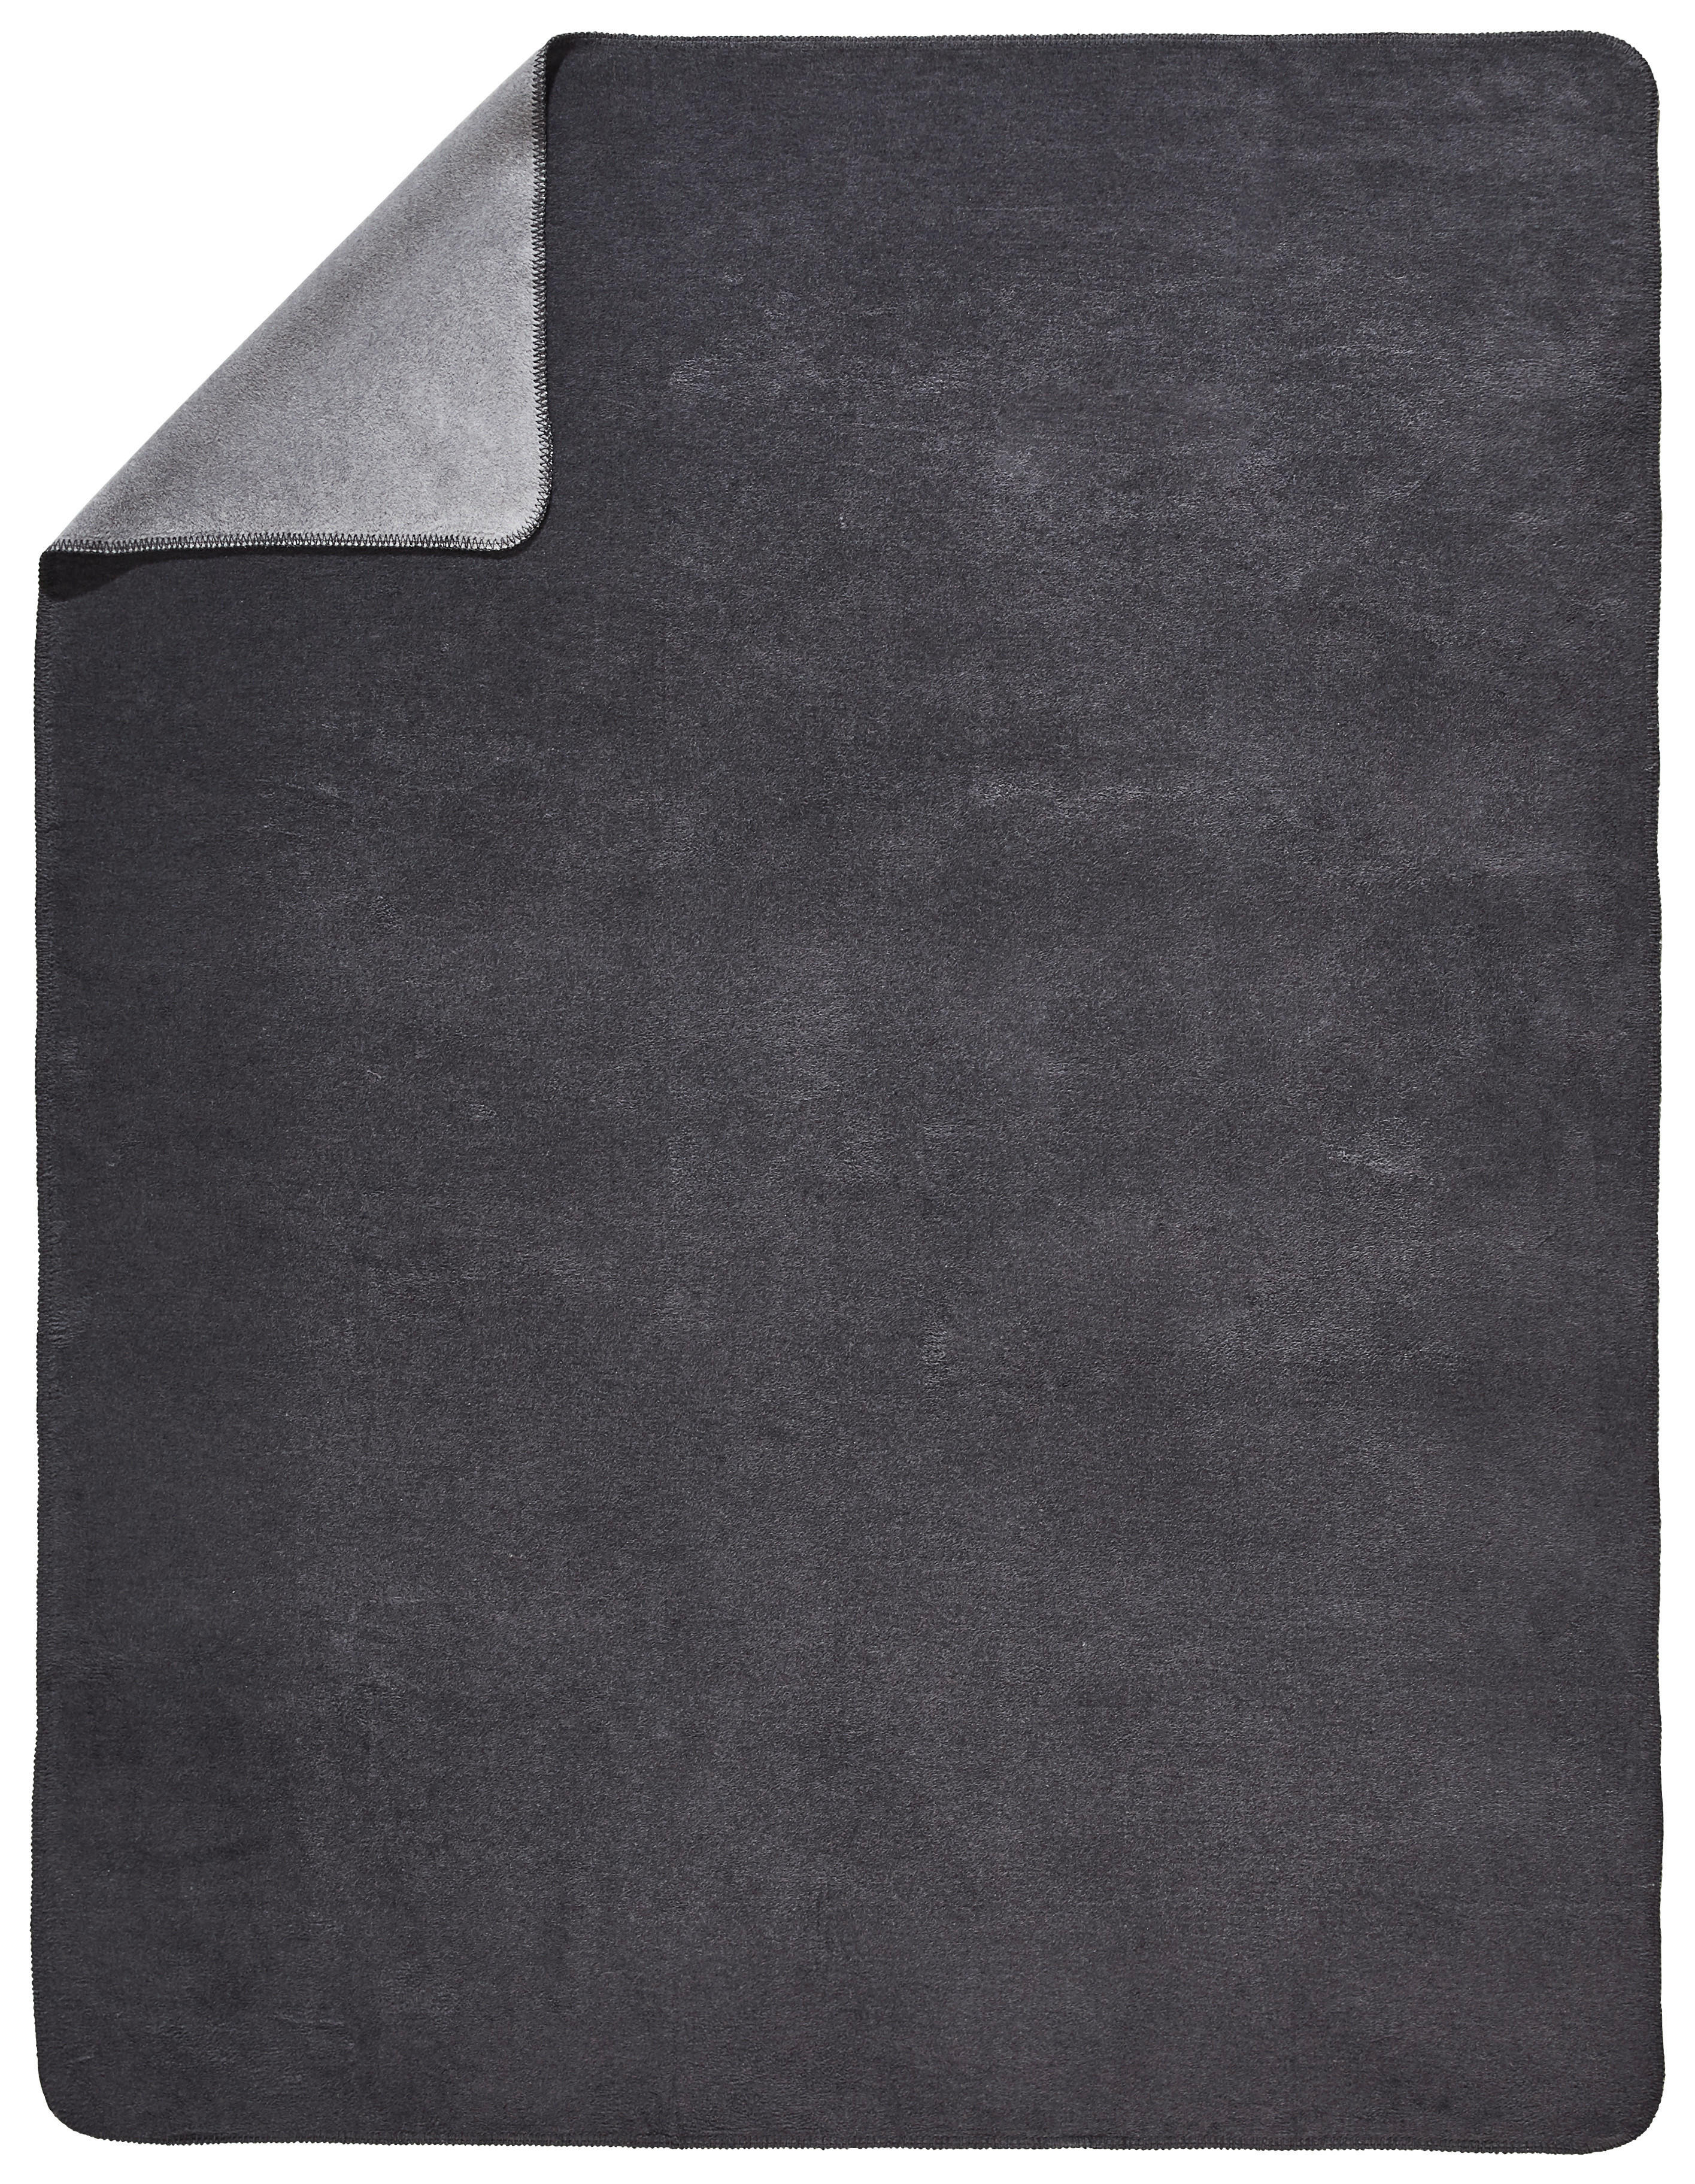 PLÄD 150/200 cm  - silver/grå, Basics, textil (150/200cm) - Novel